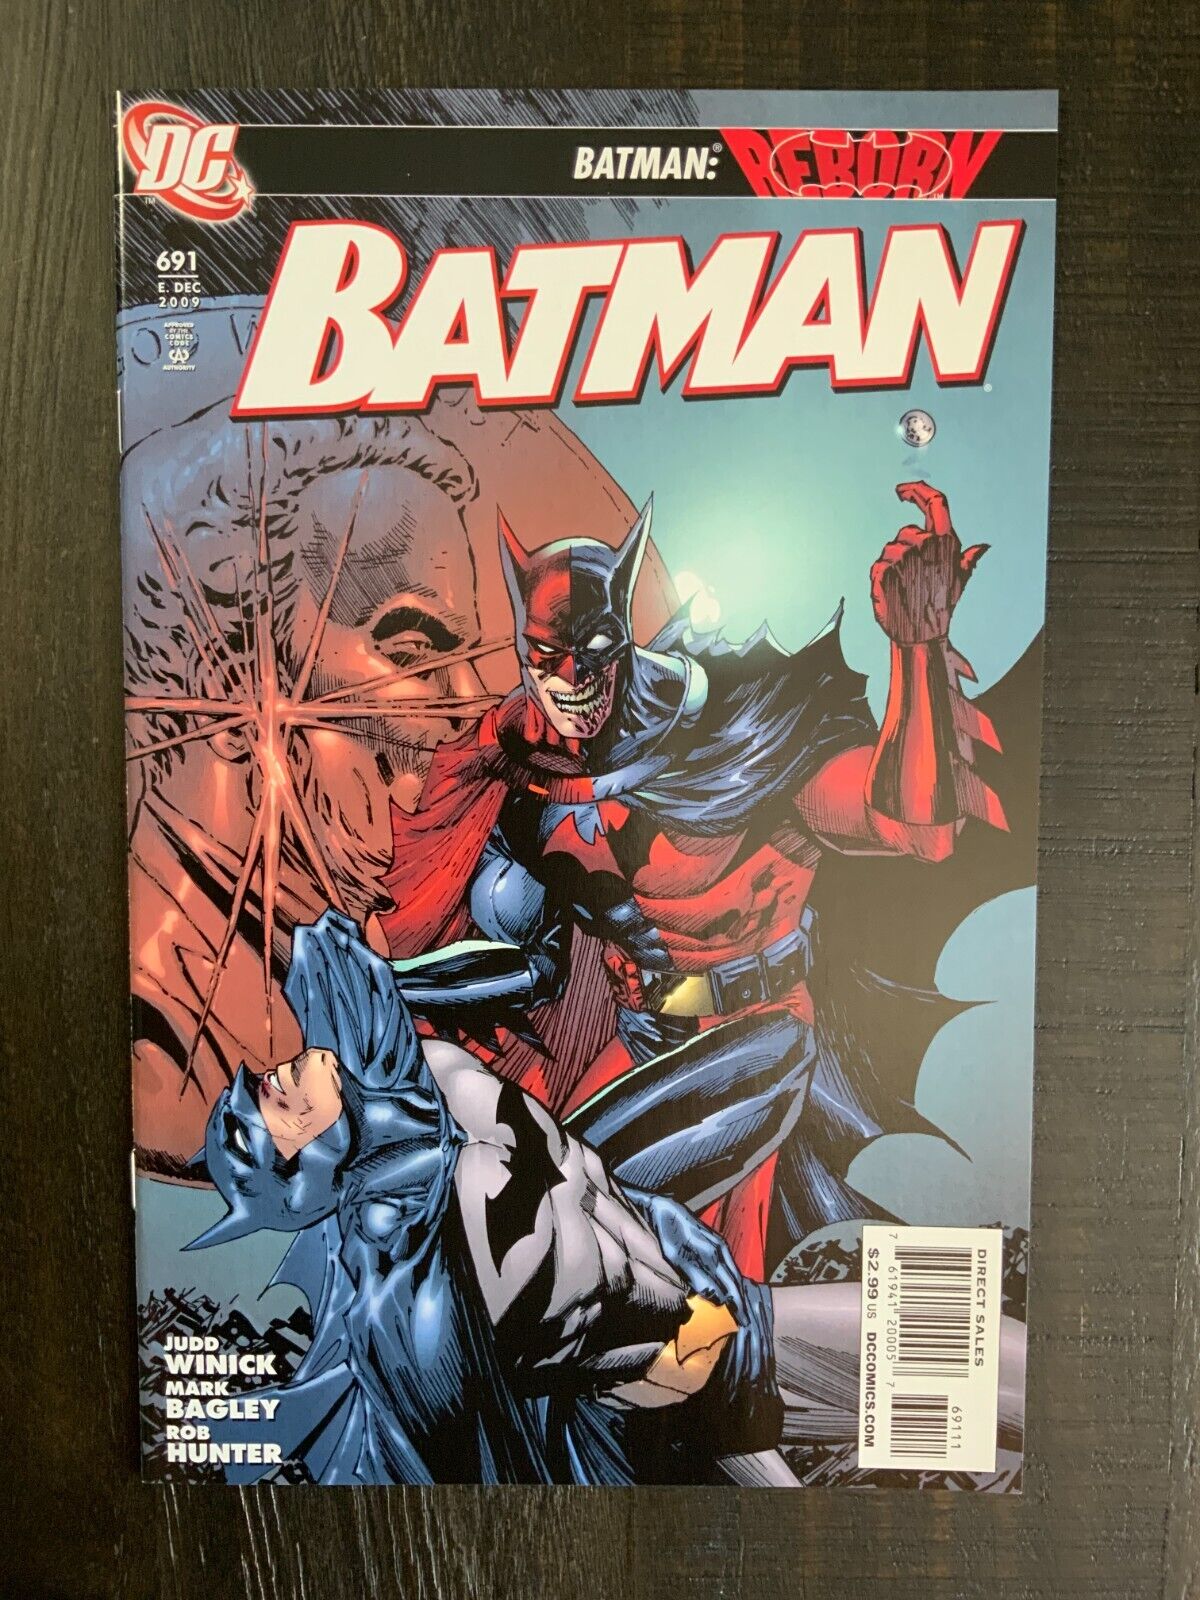 Batman #691 NM comic featuring Two-Face